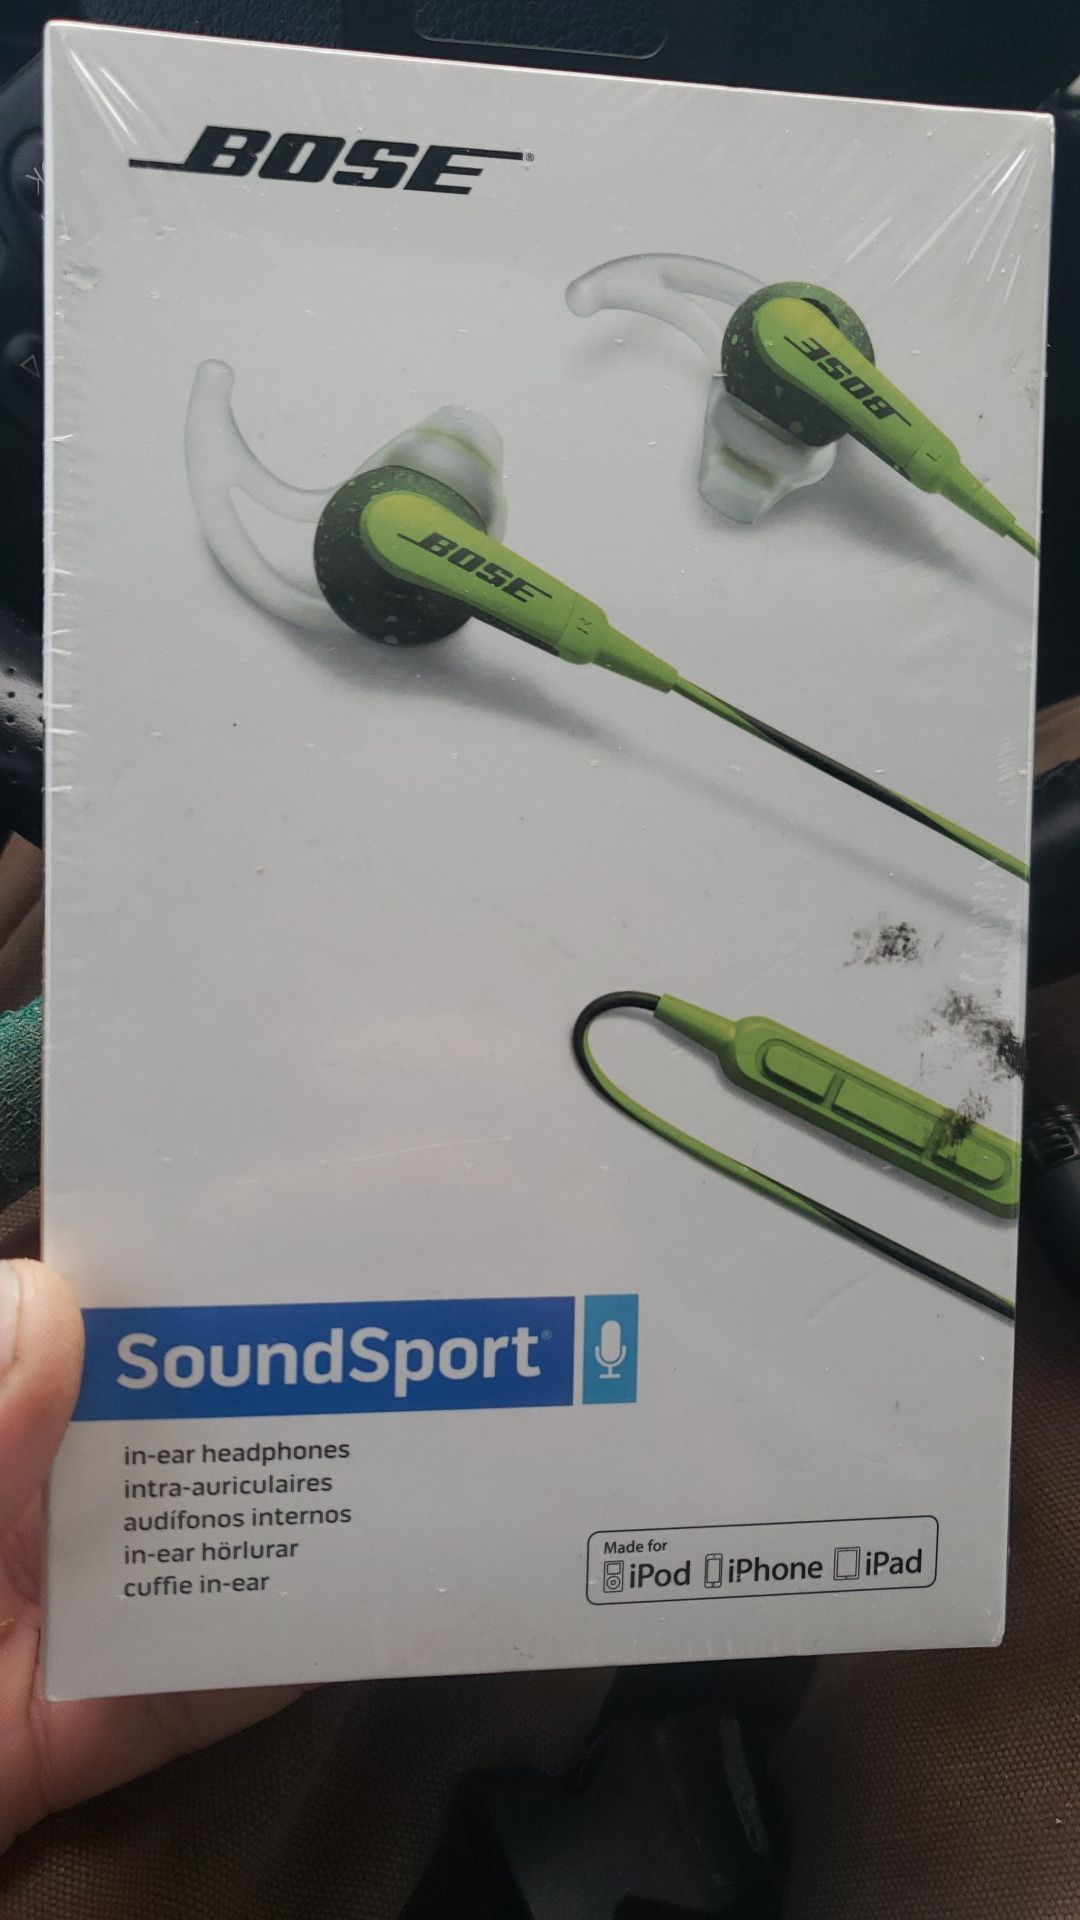 Bose Sound Sport ear buds